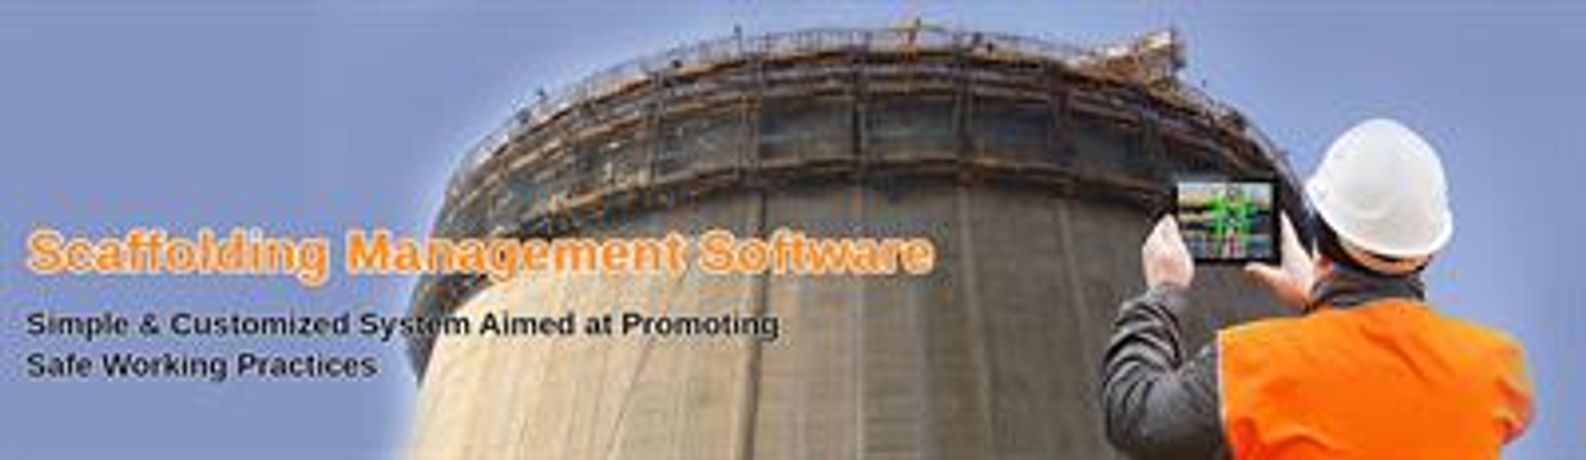 ASK-EHS - Scaffolding Management Software for Construction Sites